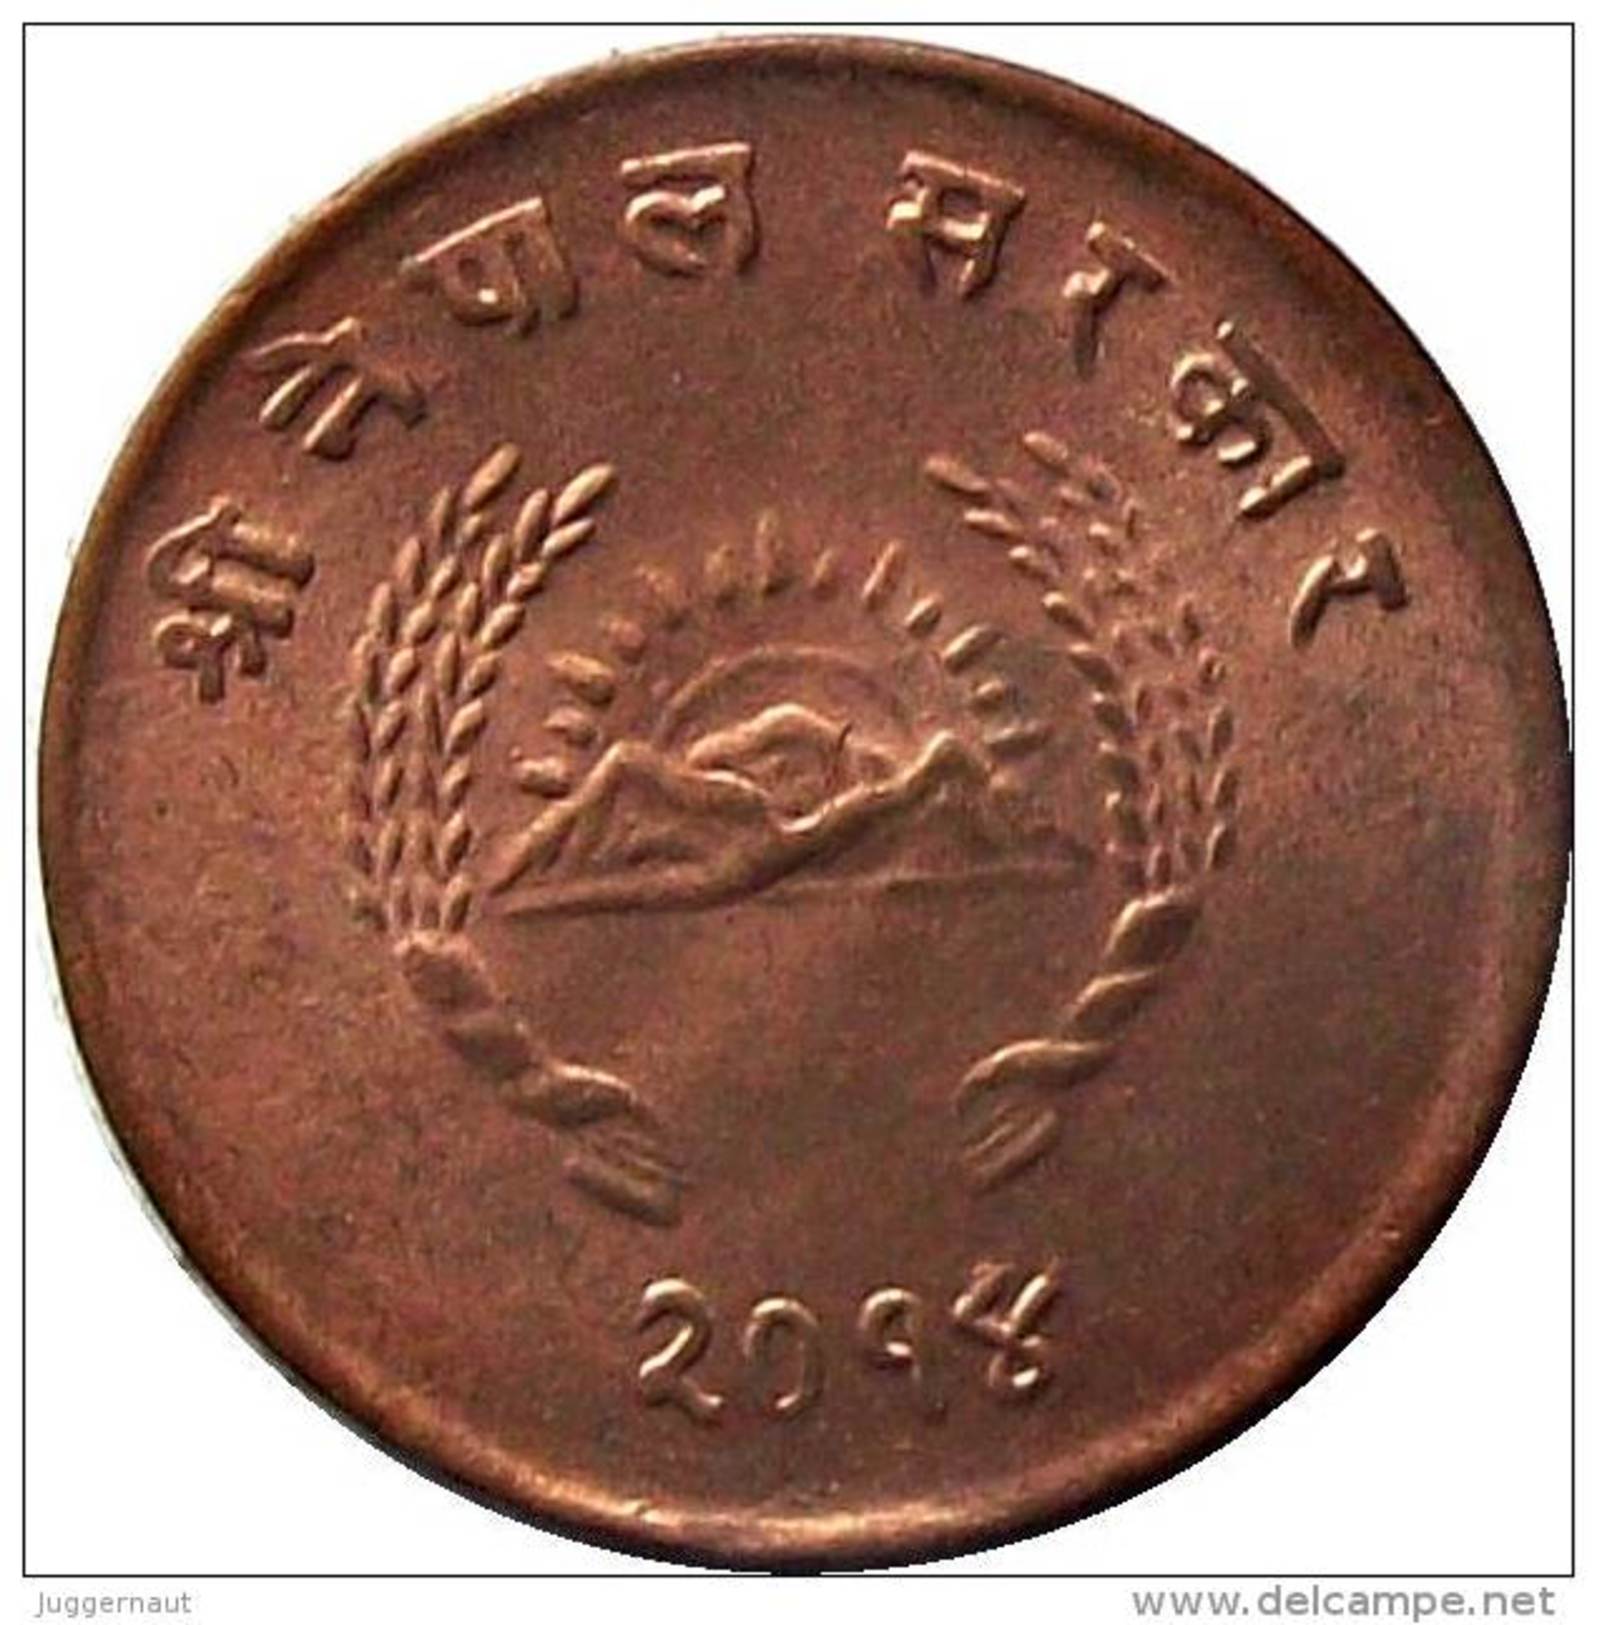 NEPAL 5 PAISA BRONZE CIRCULATION COIN 1957 AD KM-736 UNCIRCULATED UNC - Népal